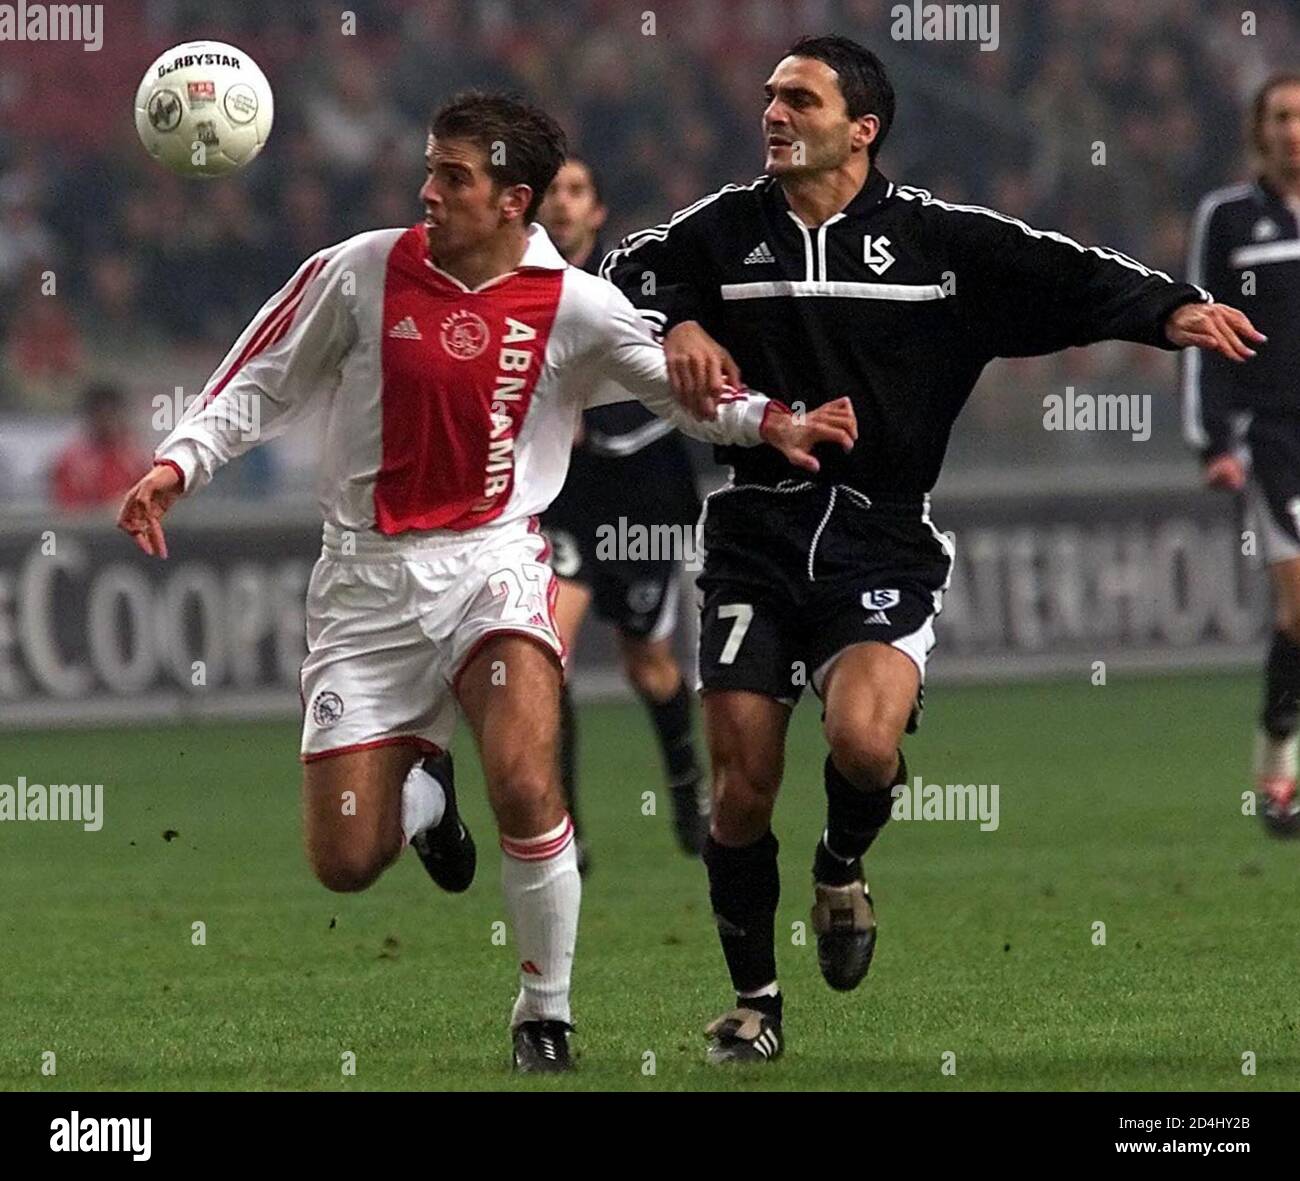 Ajax Amsterdam's Rafael van der Vaart (left) challenges Lausanne Sports' Massimo Lombardo during their UEFA Cup soccer match In the Artena stadium in Amsterdam November 9, 2000.  LVG Stock Photo